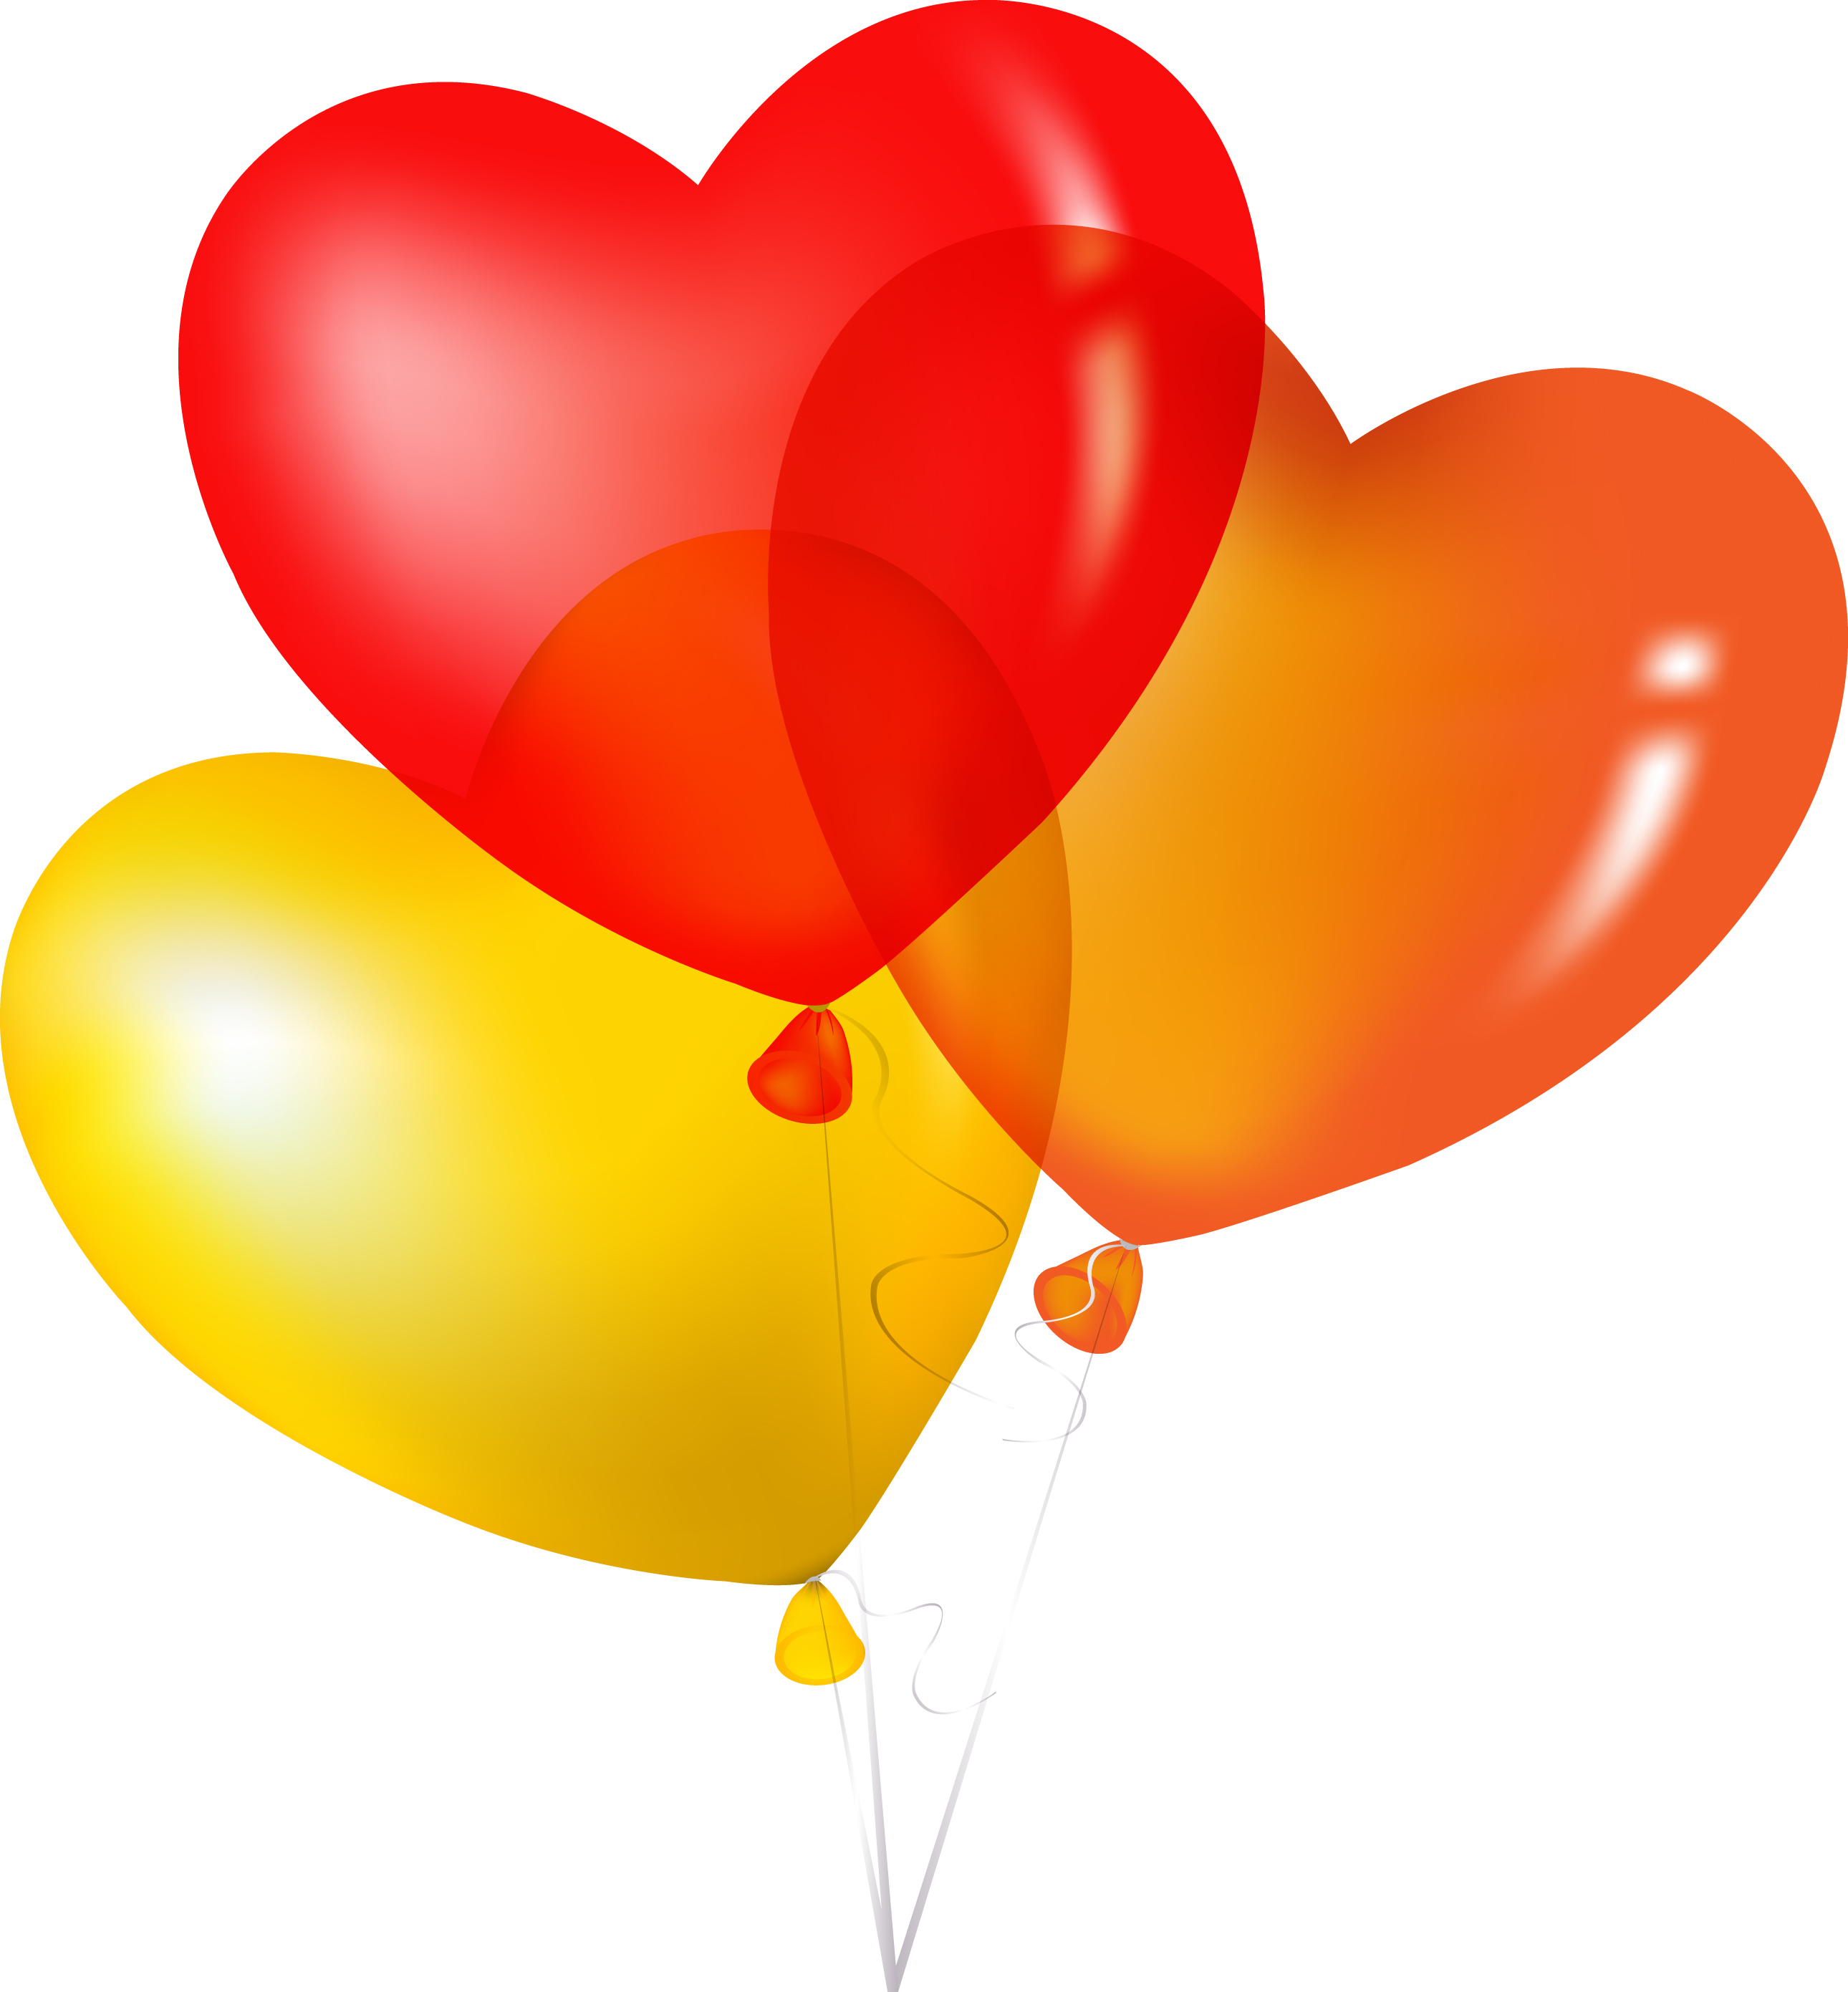 balloon clip art free download - photo #34